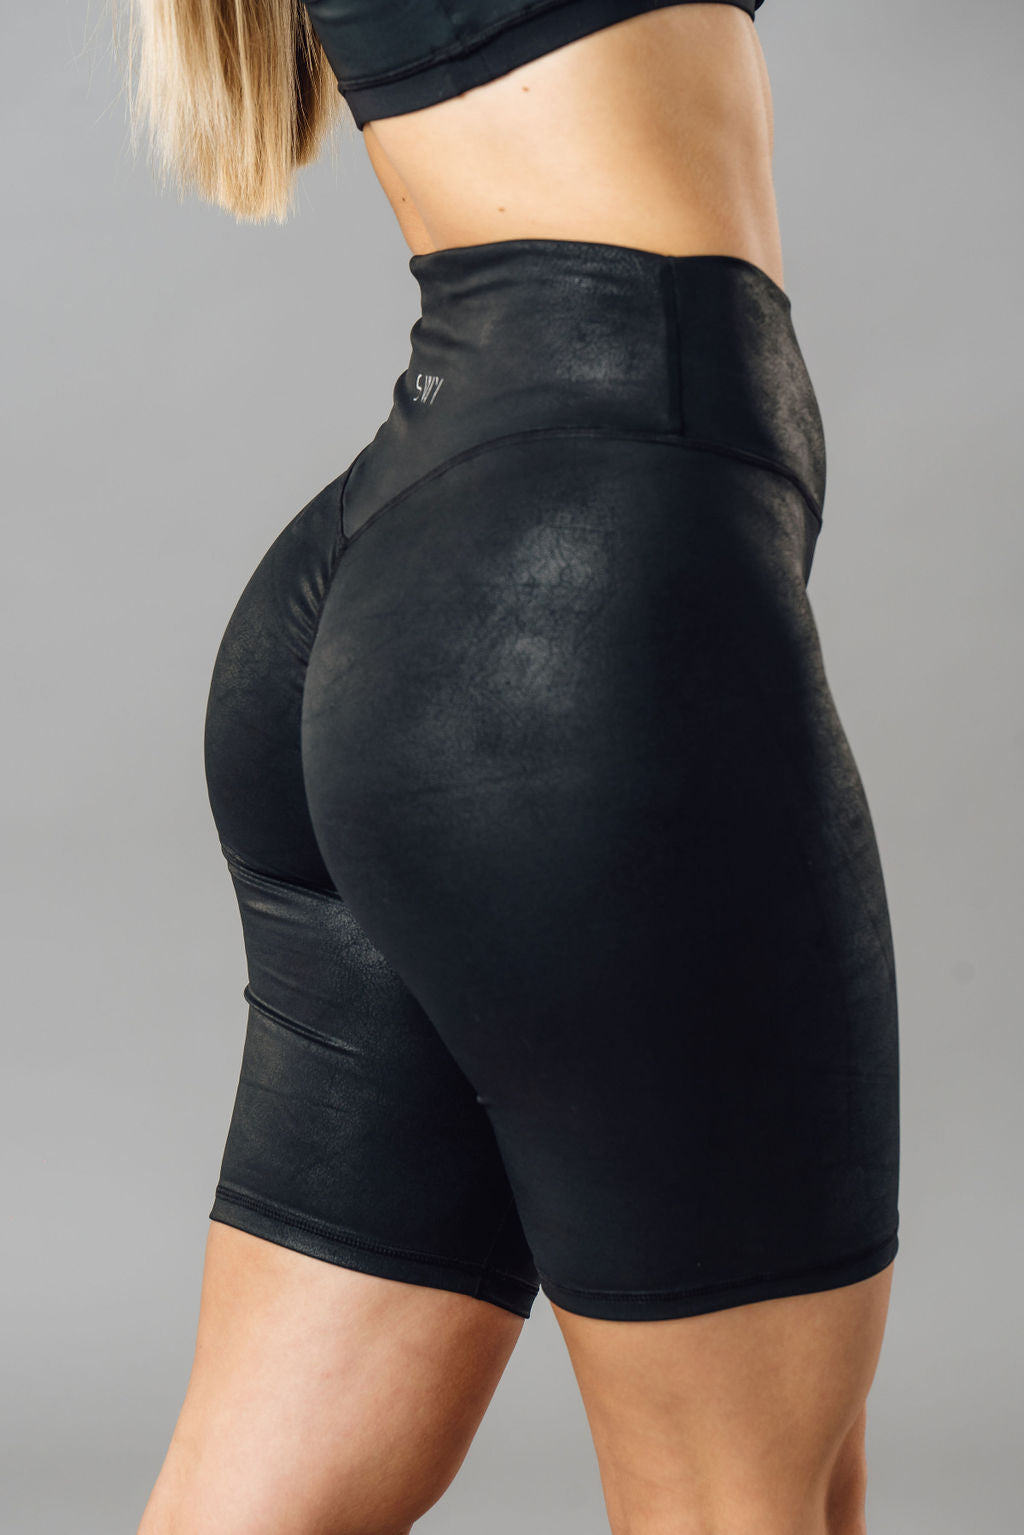 SoftLine scrunch biker shorts – SWY Brand